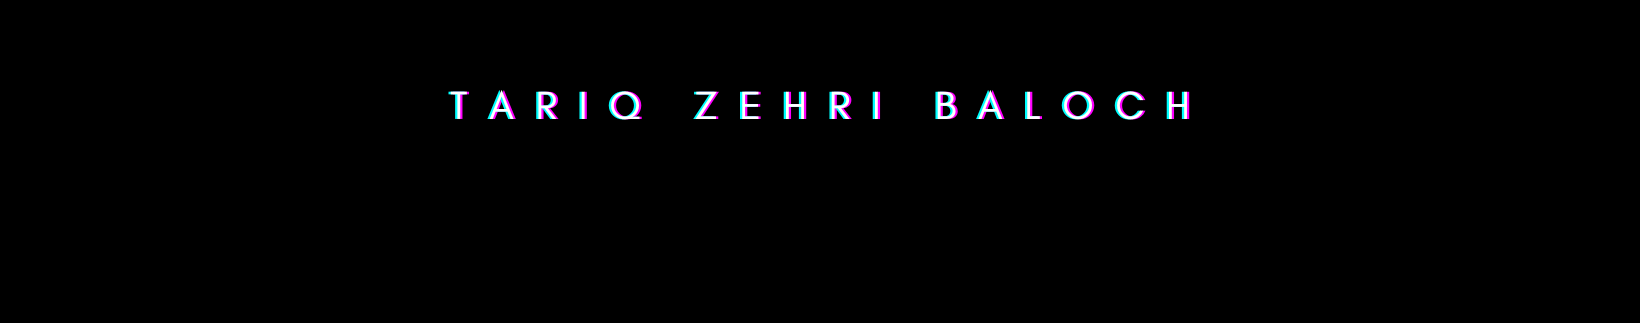 Tariq Zehri Baloch's profile banner